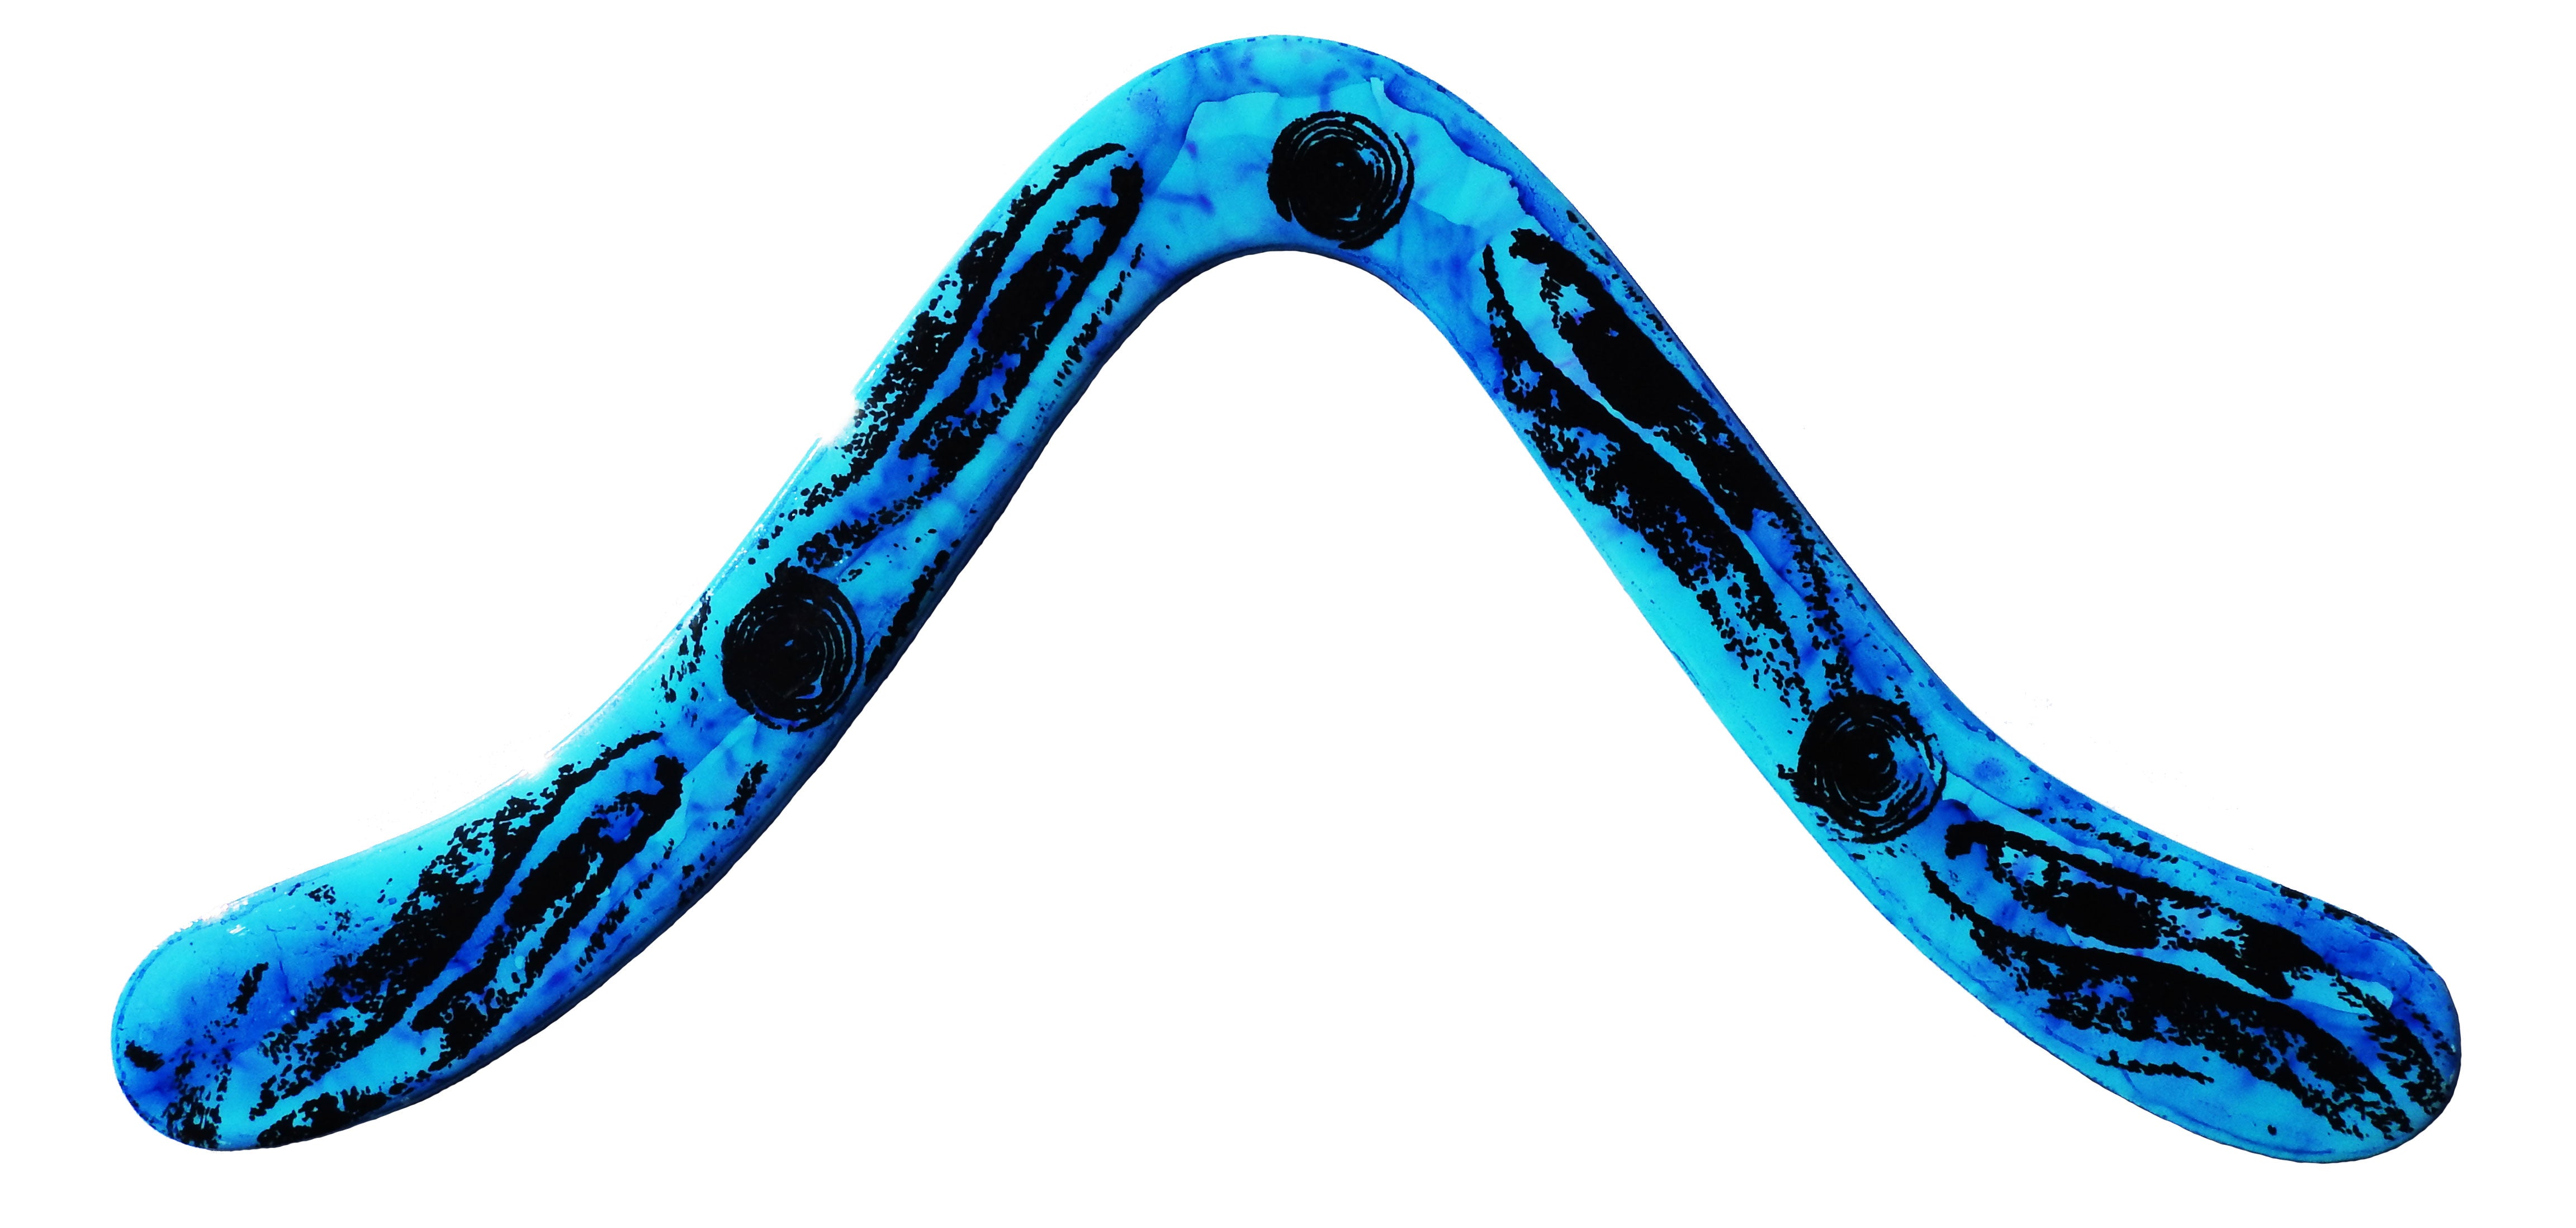 Technic Malibu Boomerang - Molded Carbon Fiber / Plastic Composite Boomerangs!